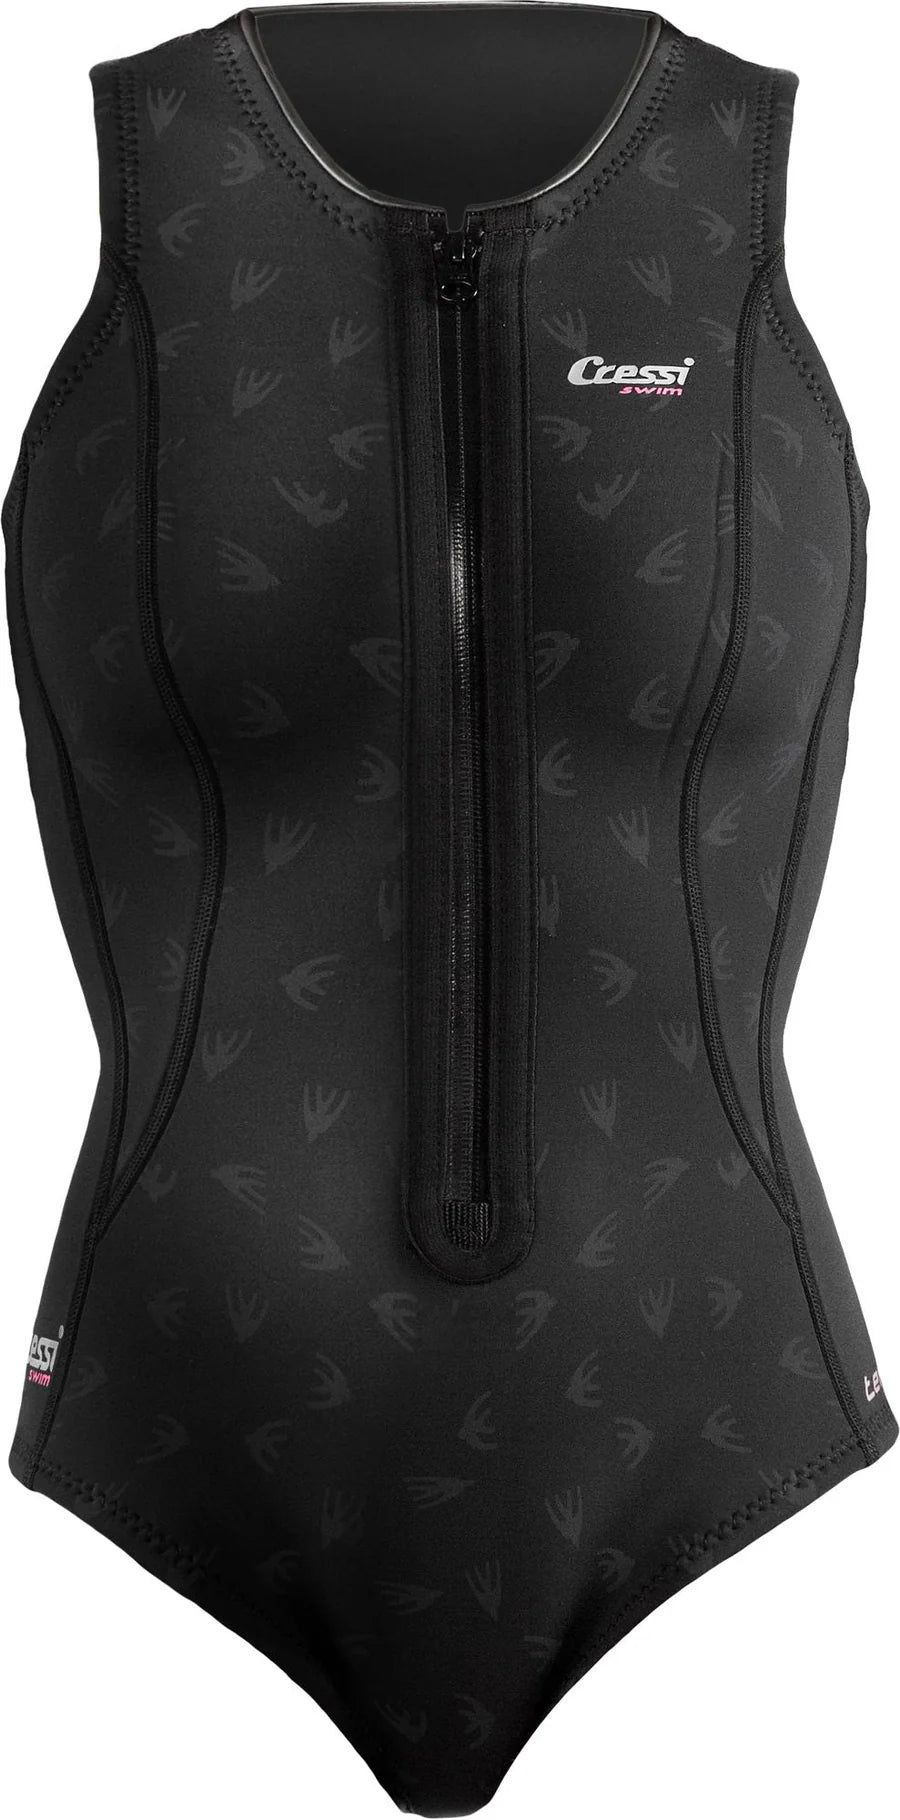 Cressi Termico Lady Swimsuit Black 2mm